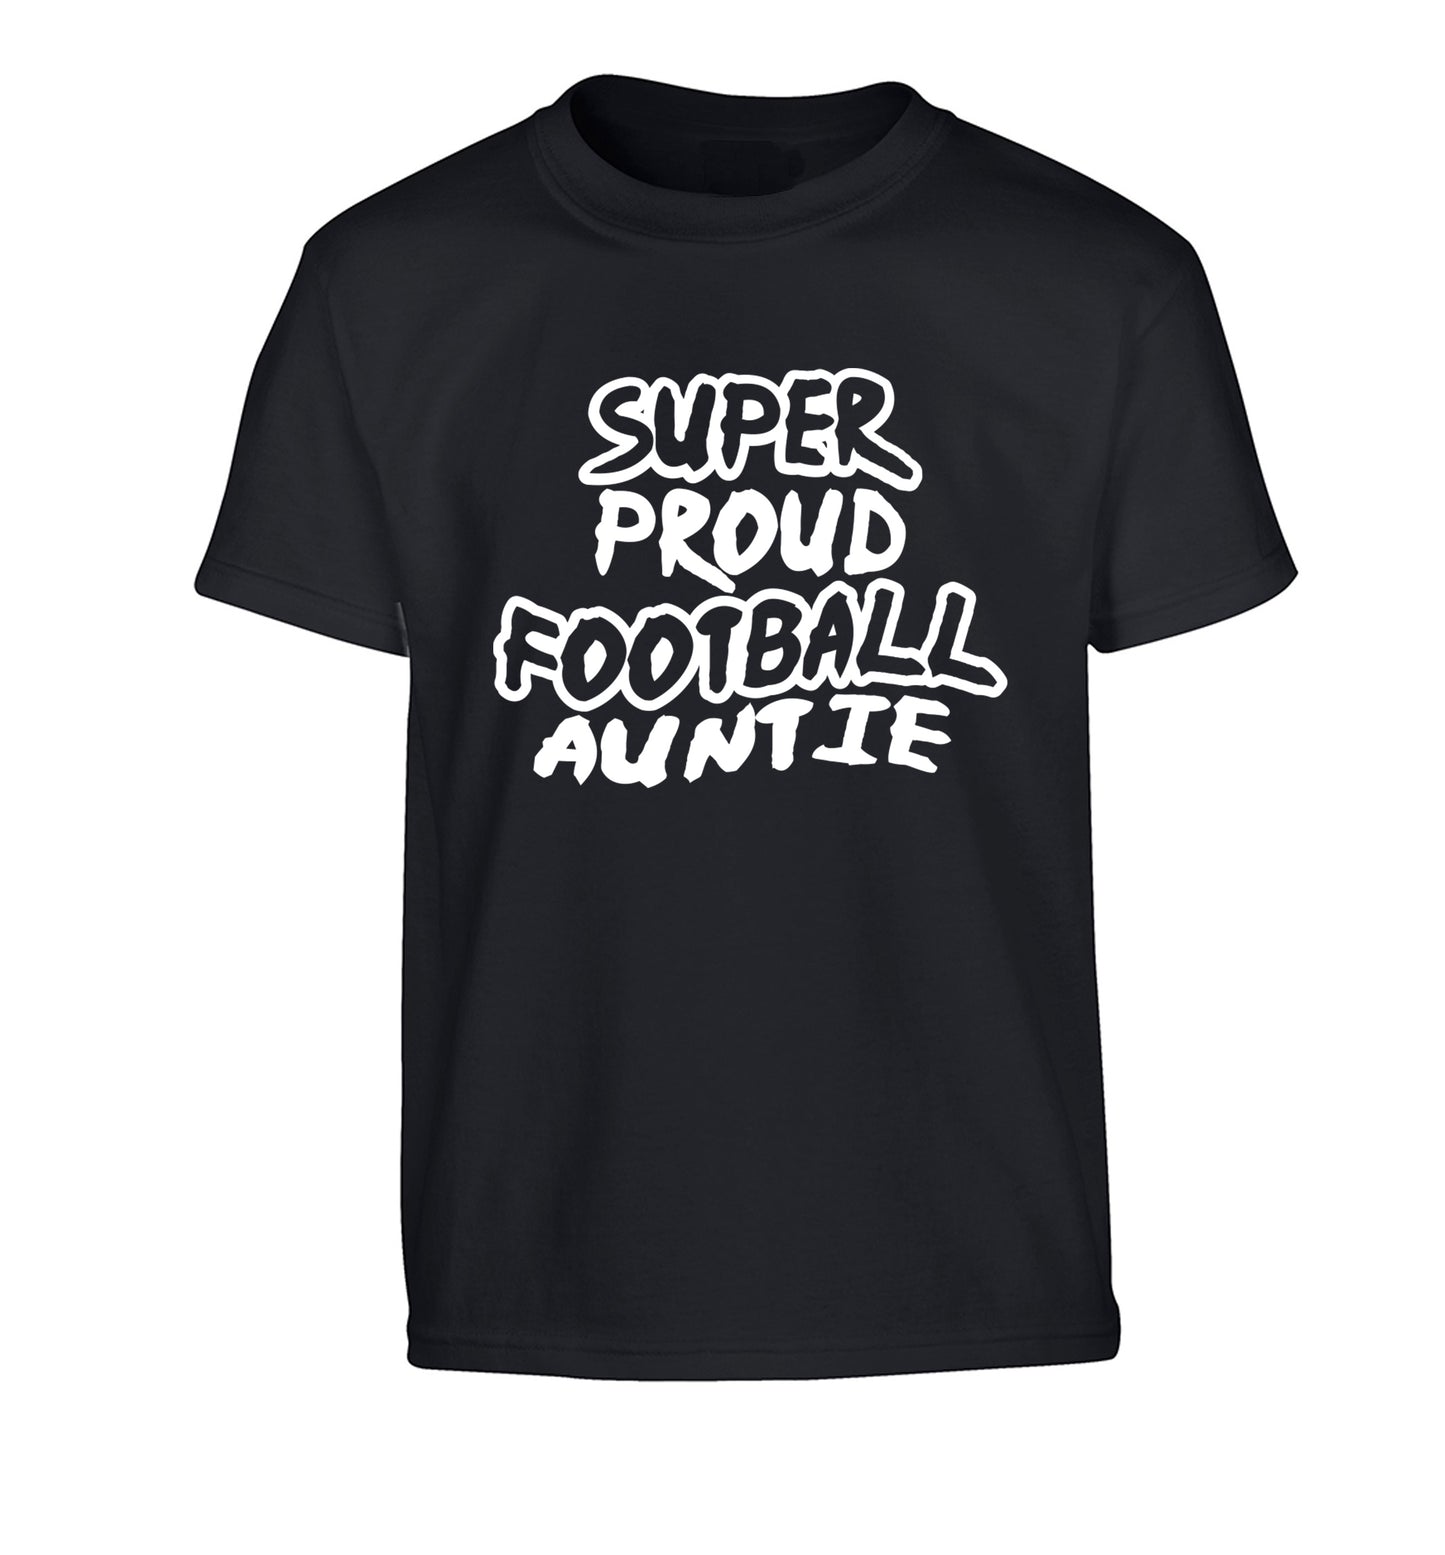 Super proud football auntie Children's black Tshirt 12-14 Years